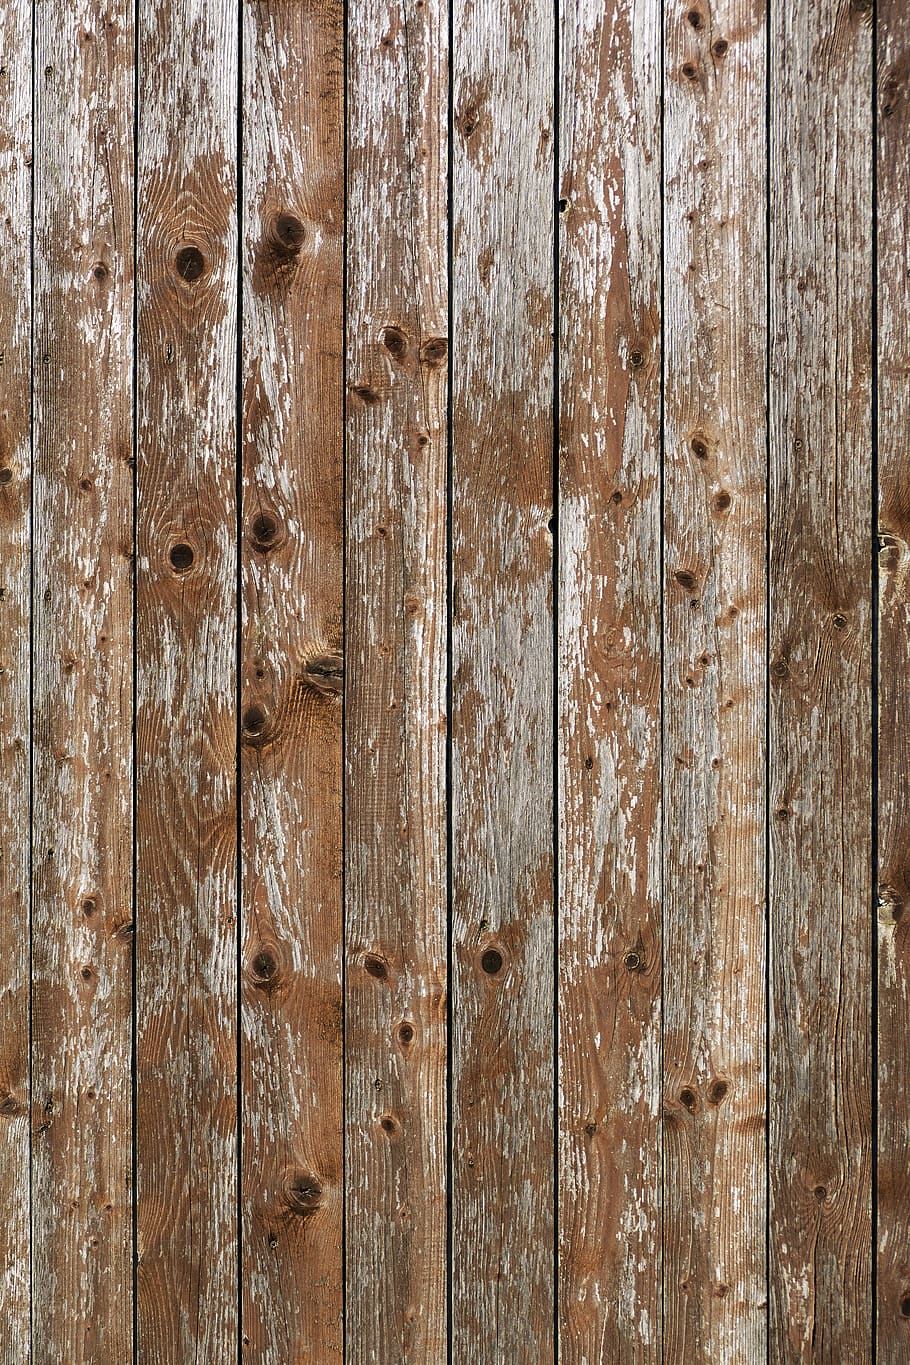 madera, tableros, pared de madera, fachada, antiguo, panel, resistido, ramas, listones, fondo